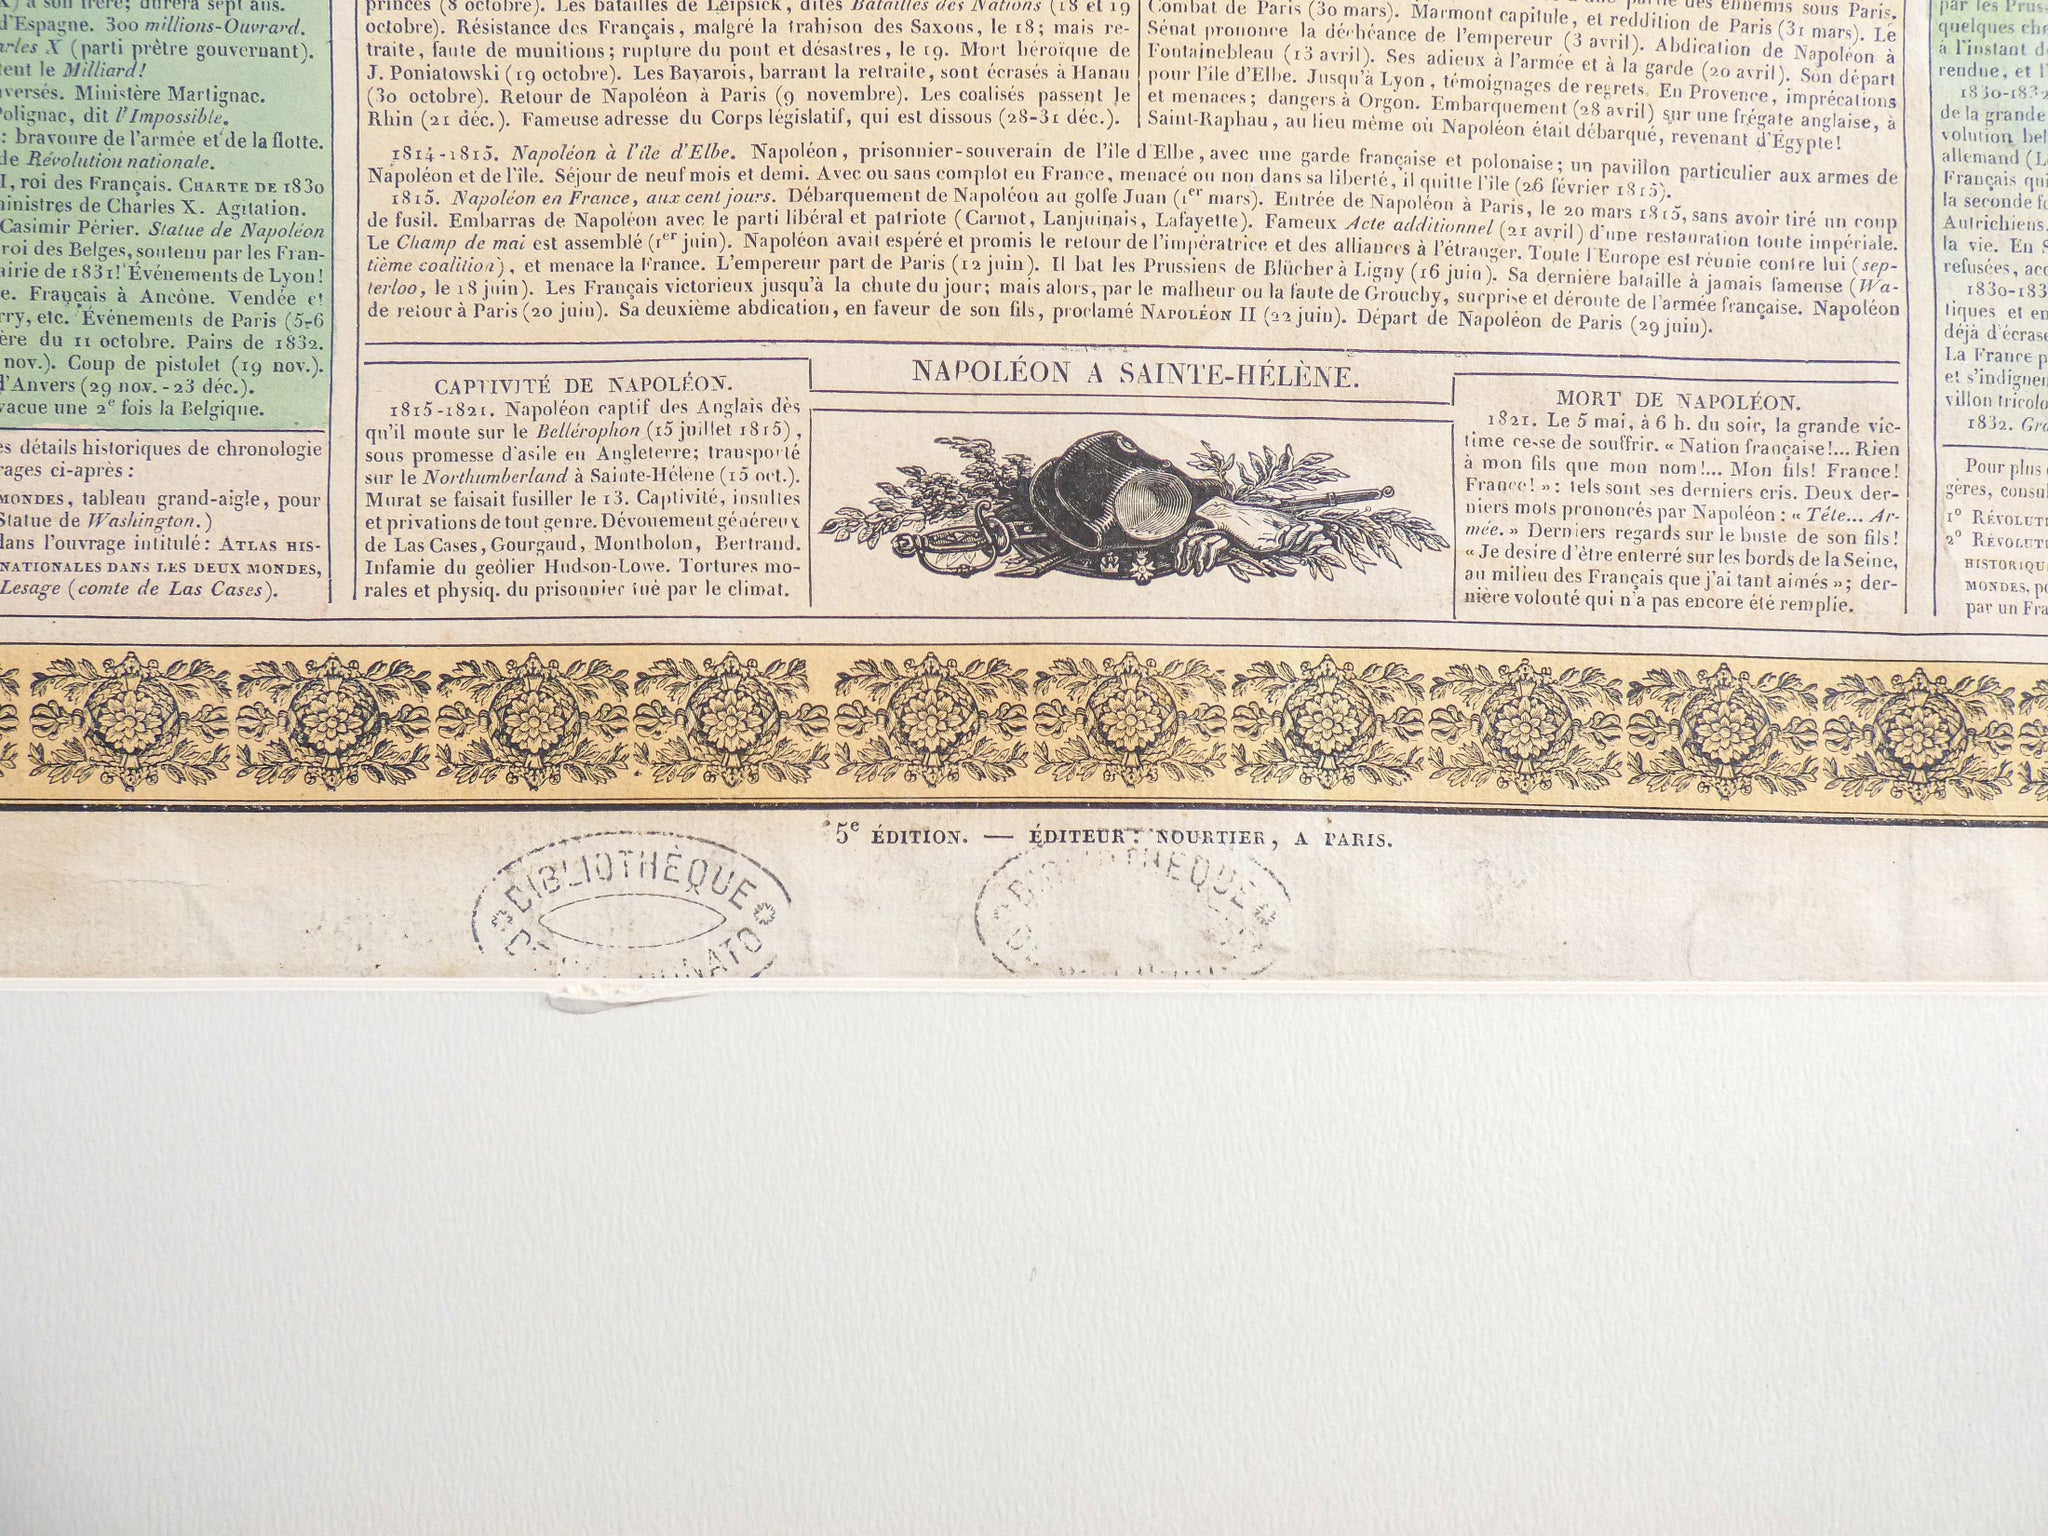 stampa napoleon et son epoque epoca 1832 tavola sinottica vita napoleone antica